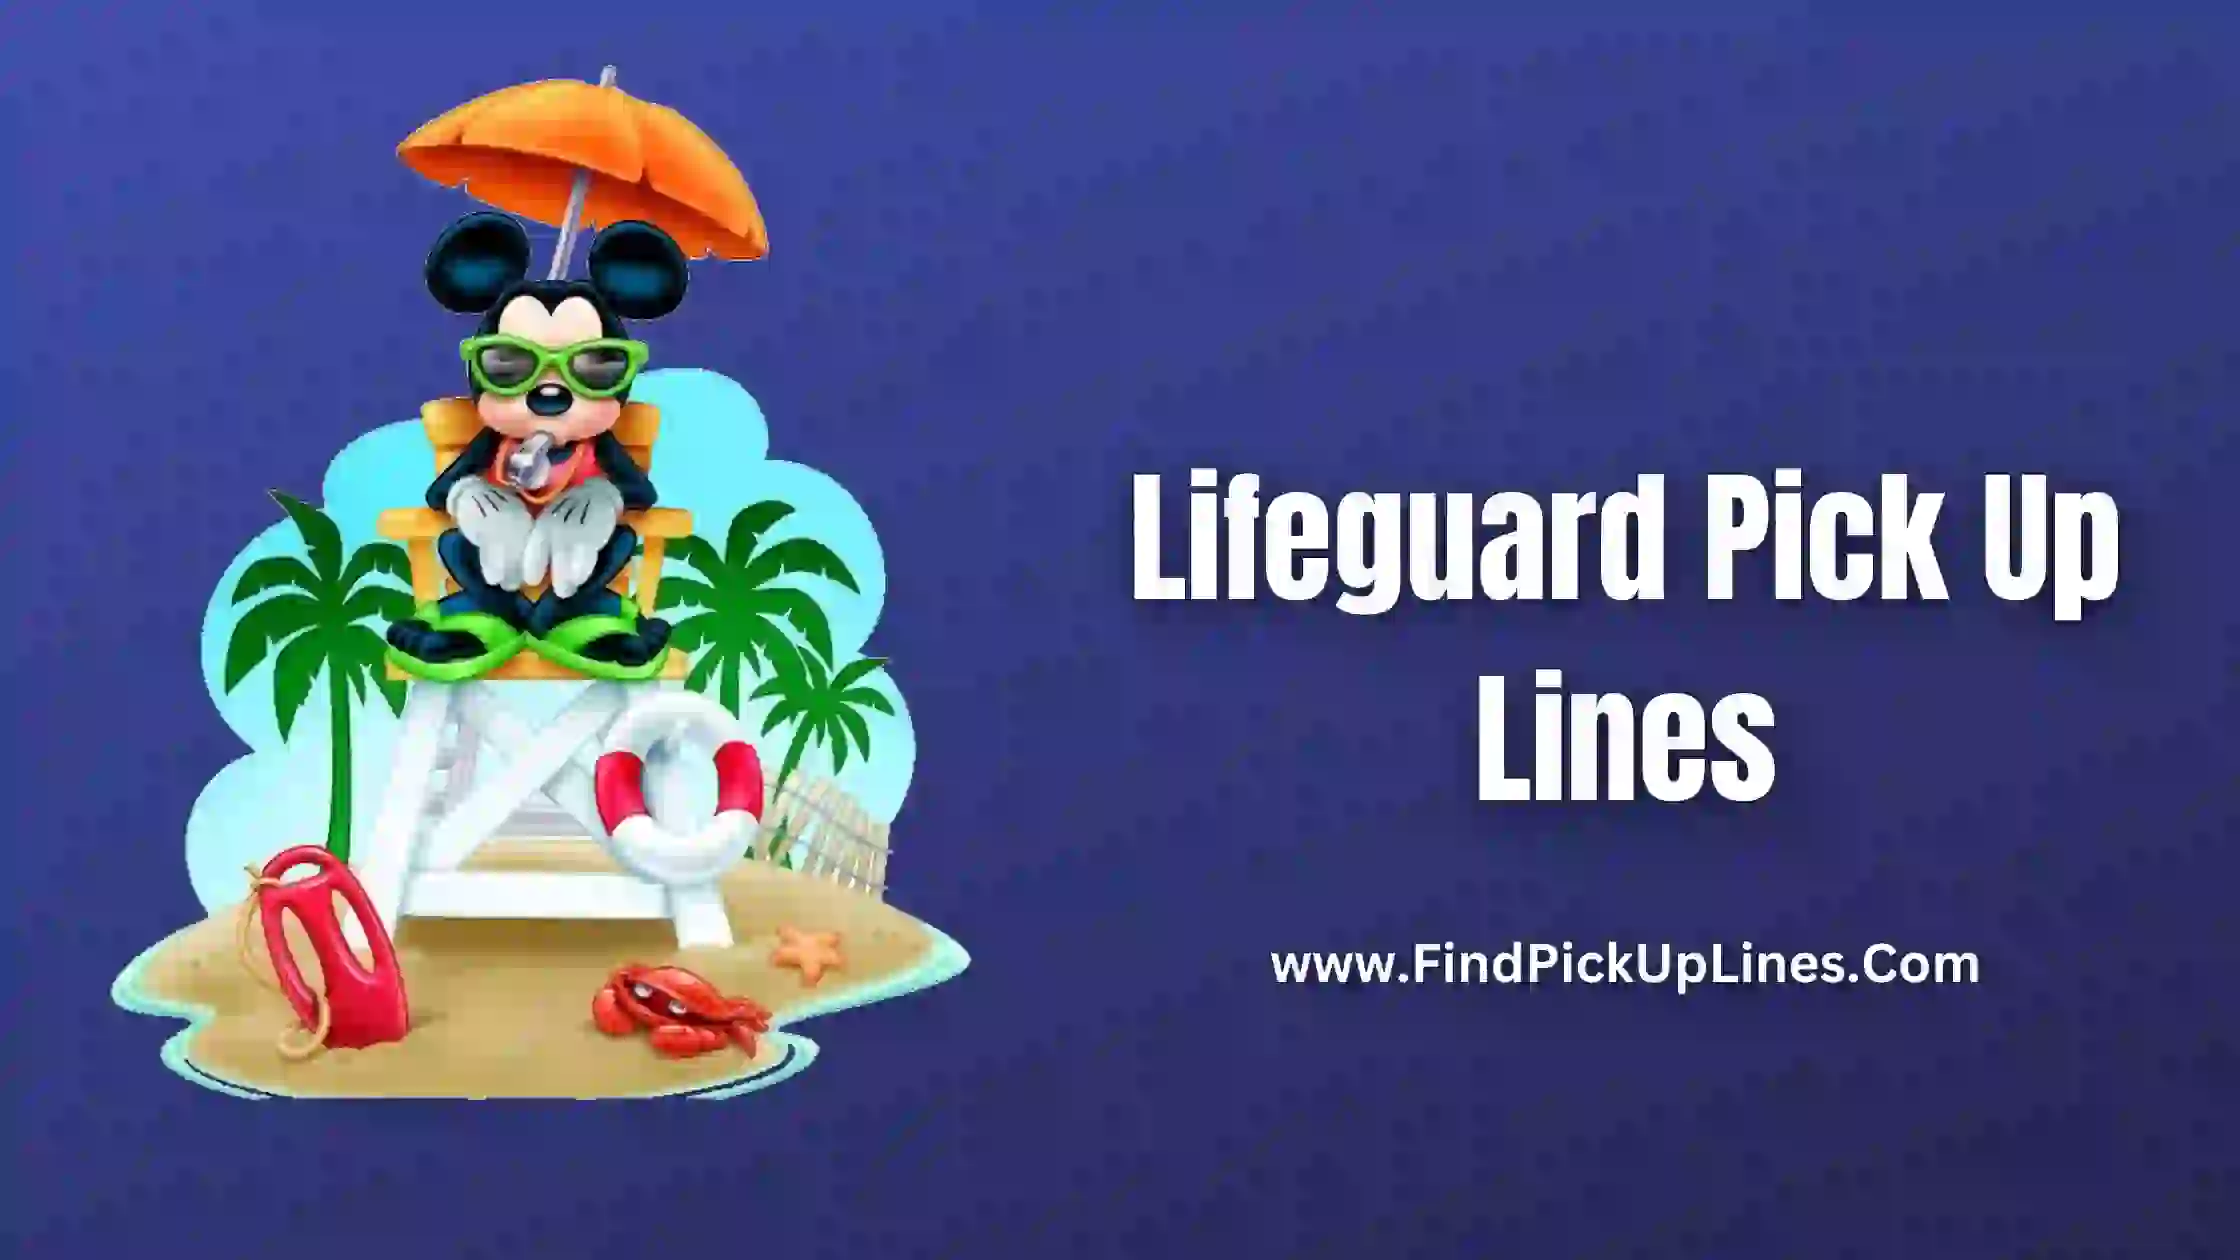 Lifeguard Pick Up Lines